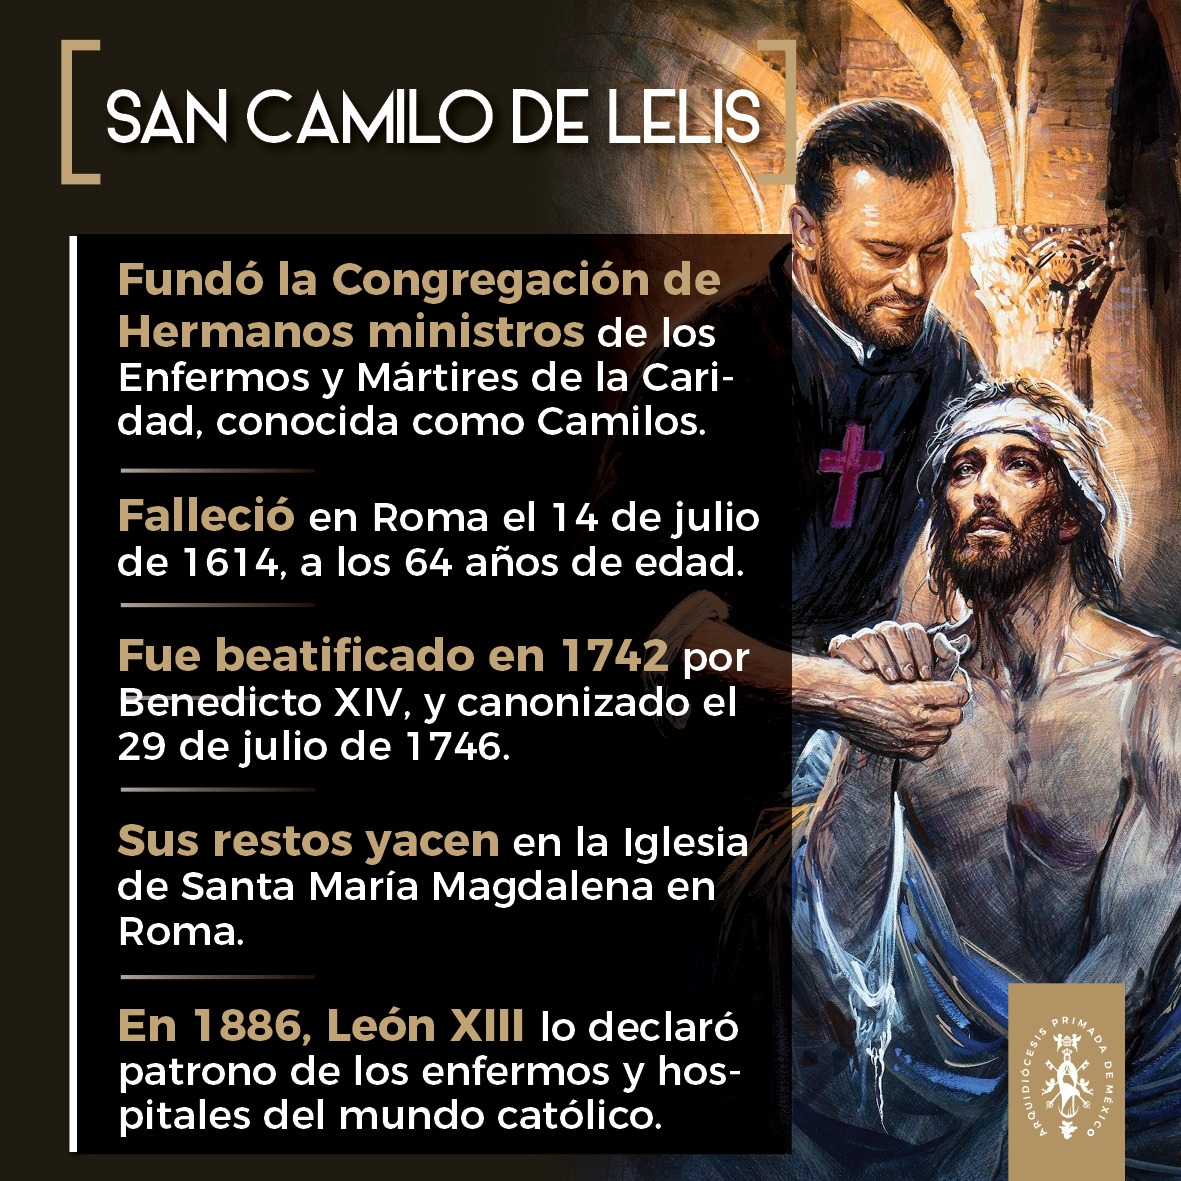 Arquidiócesis Primada de México on Twitter: 